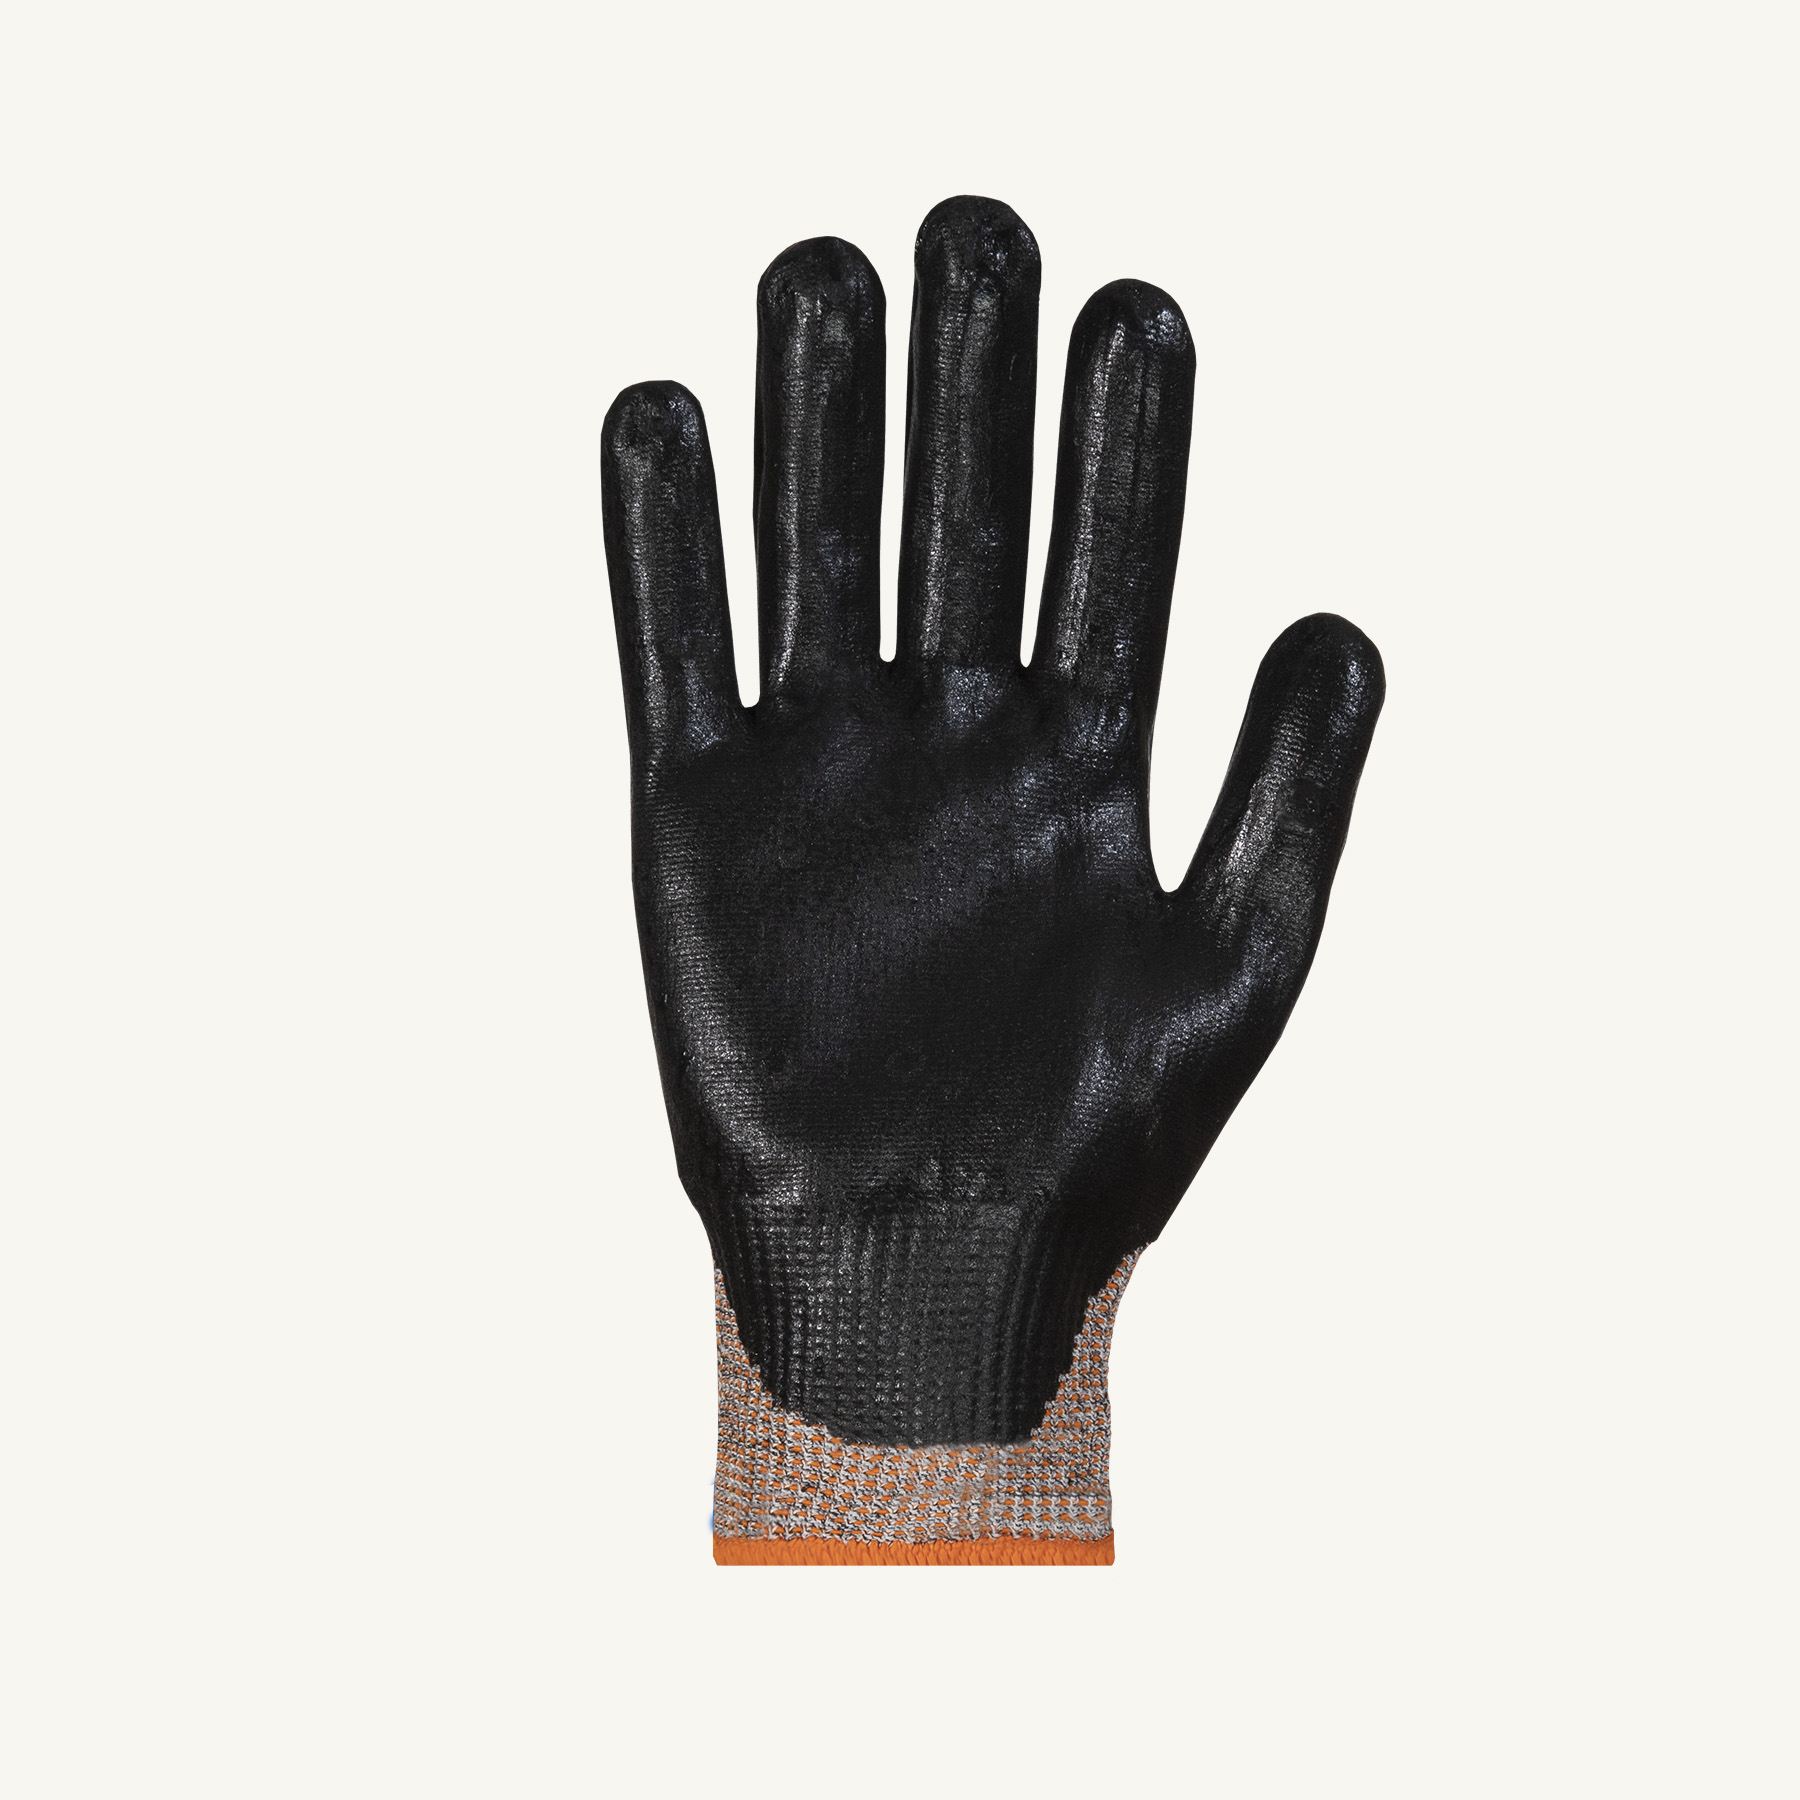 #STXFNVB - Superior Glove®  TenActiv™ Anti-Impact Cut-Resistant Composite Glove w/ Foam Nitrile Palms